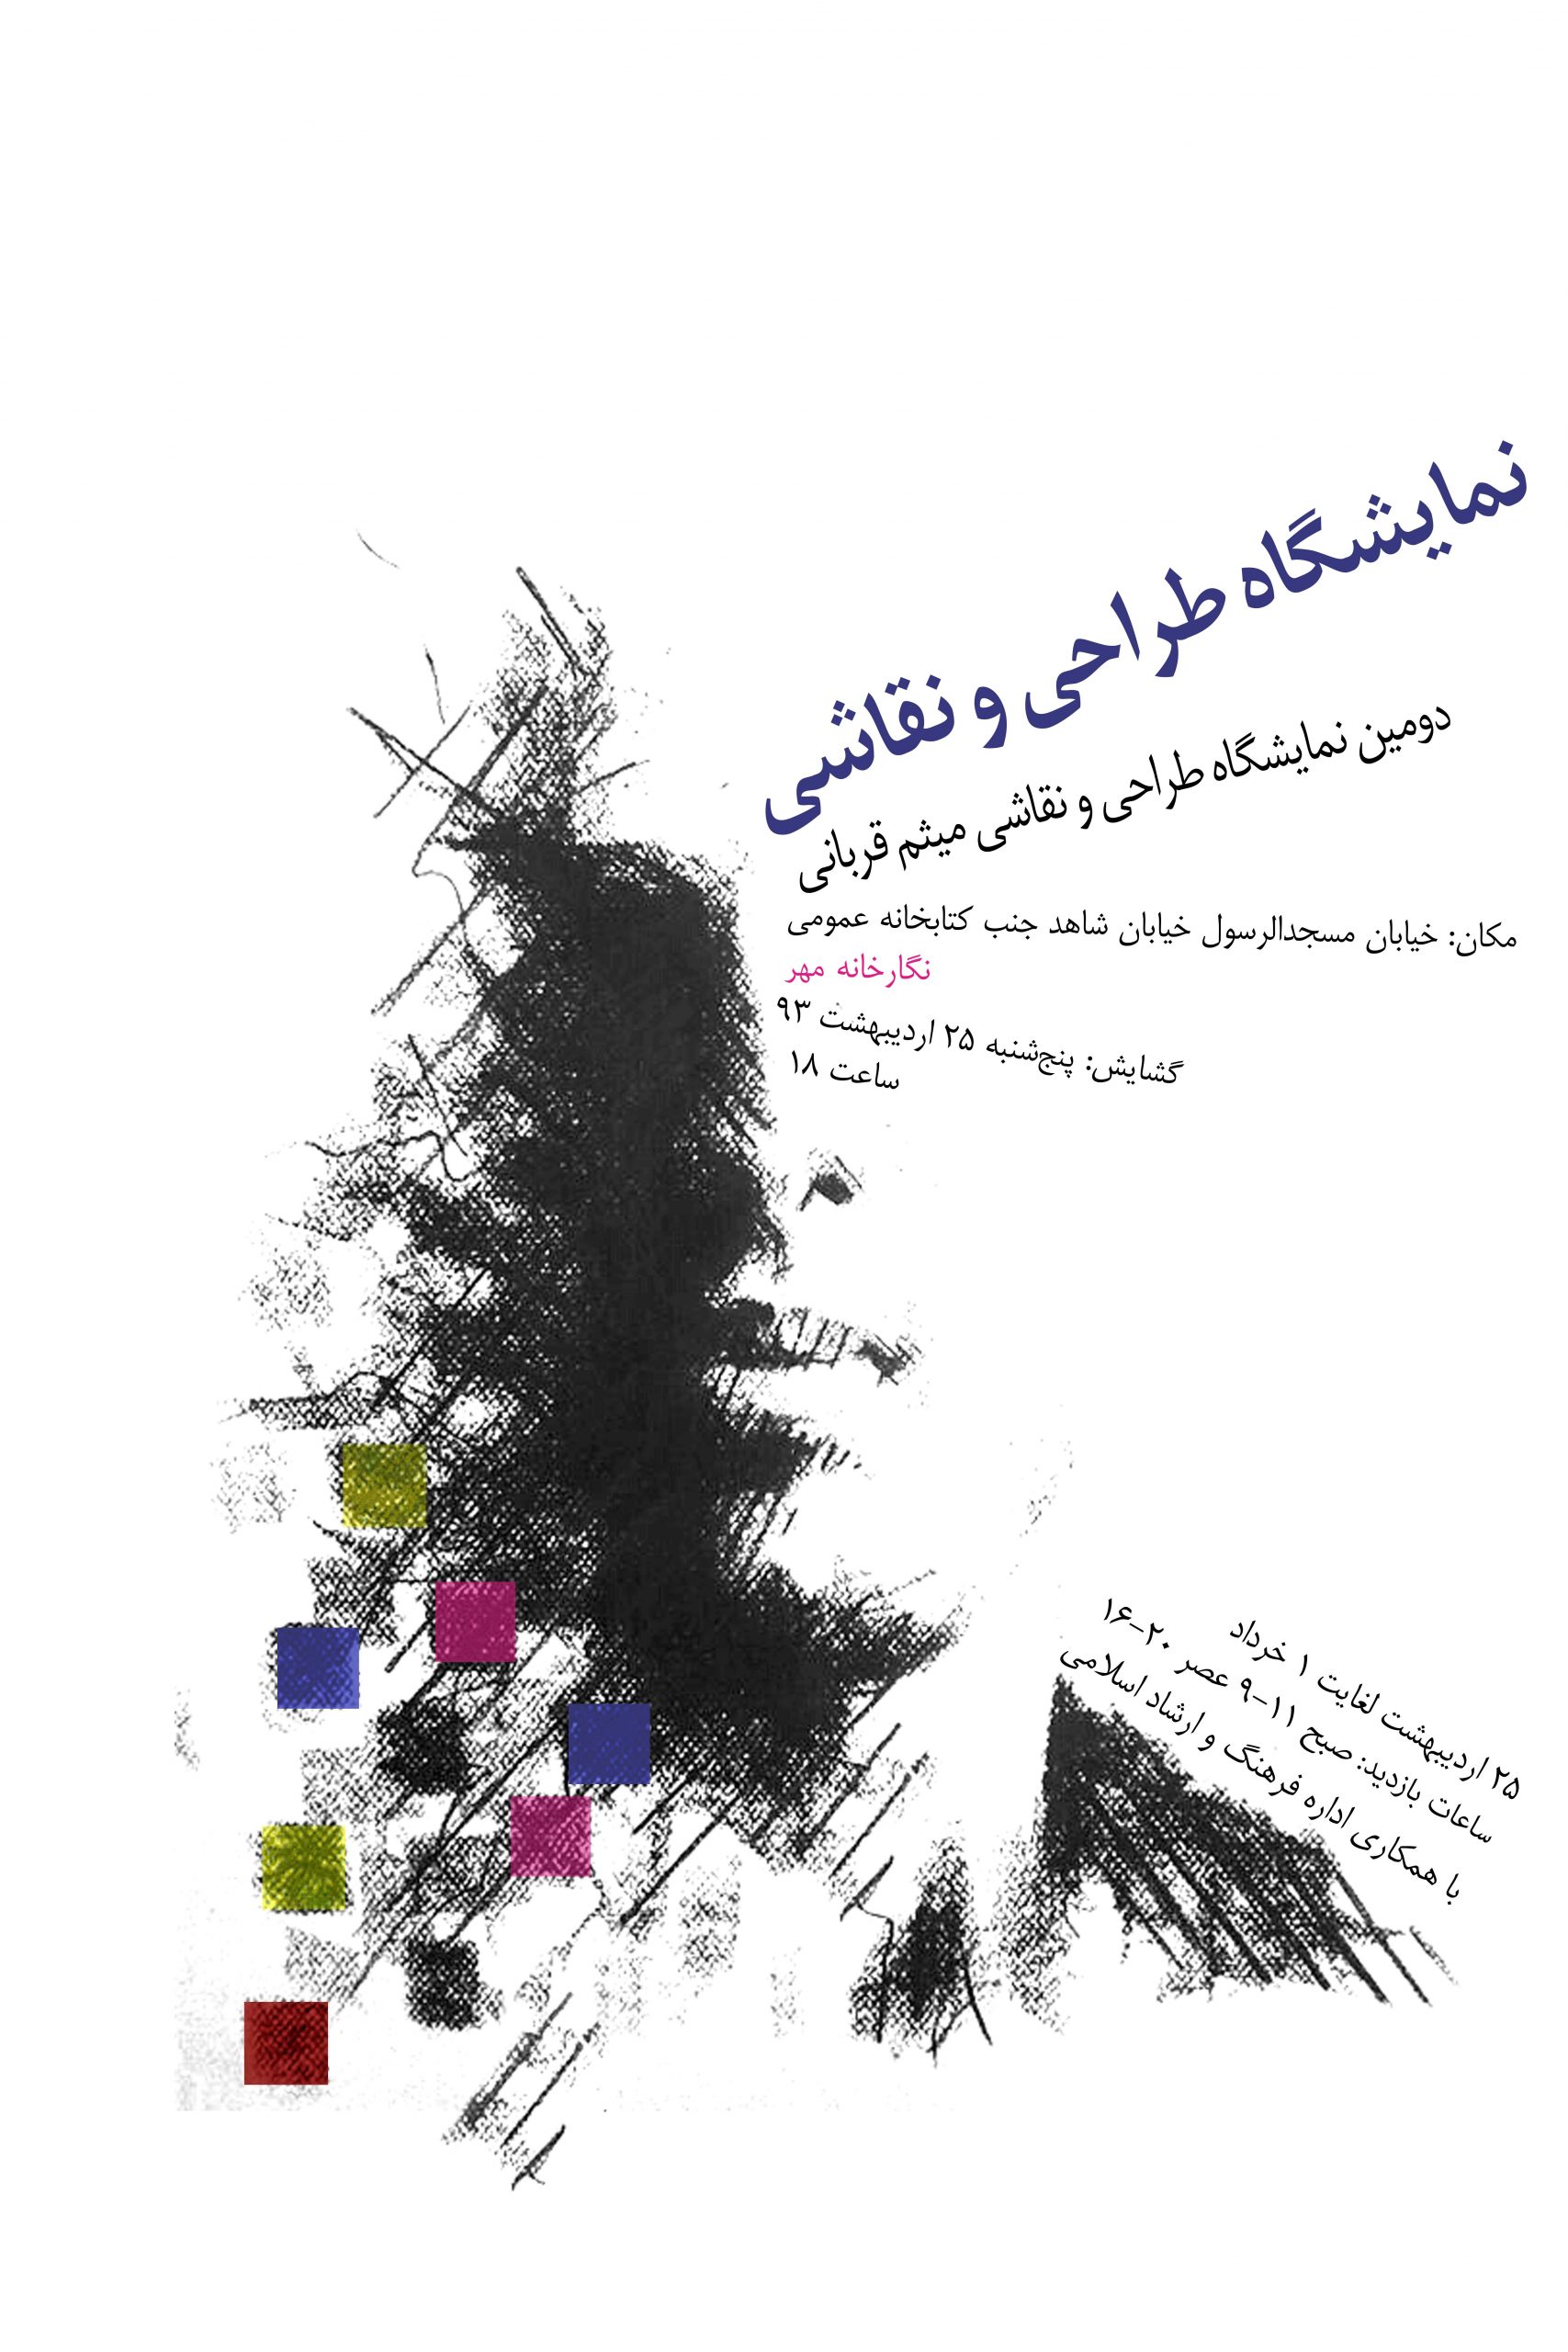 پوستر نمایشگاه meysam qorbani's exhibition poster online drawing and painting classes are available